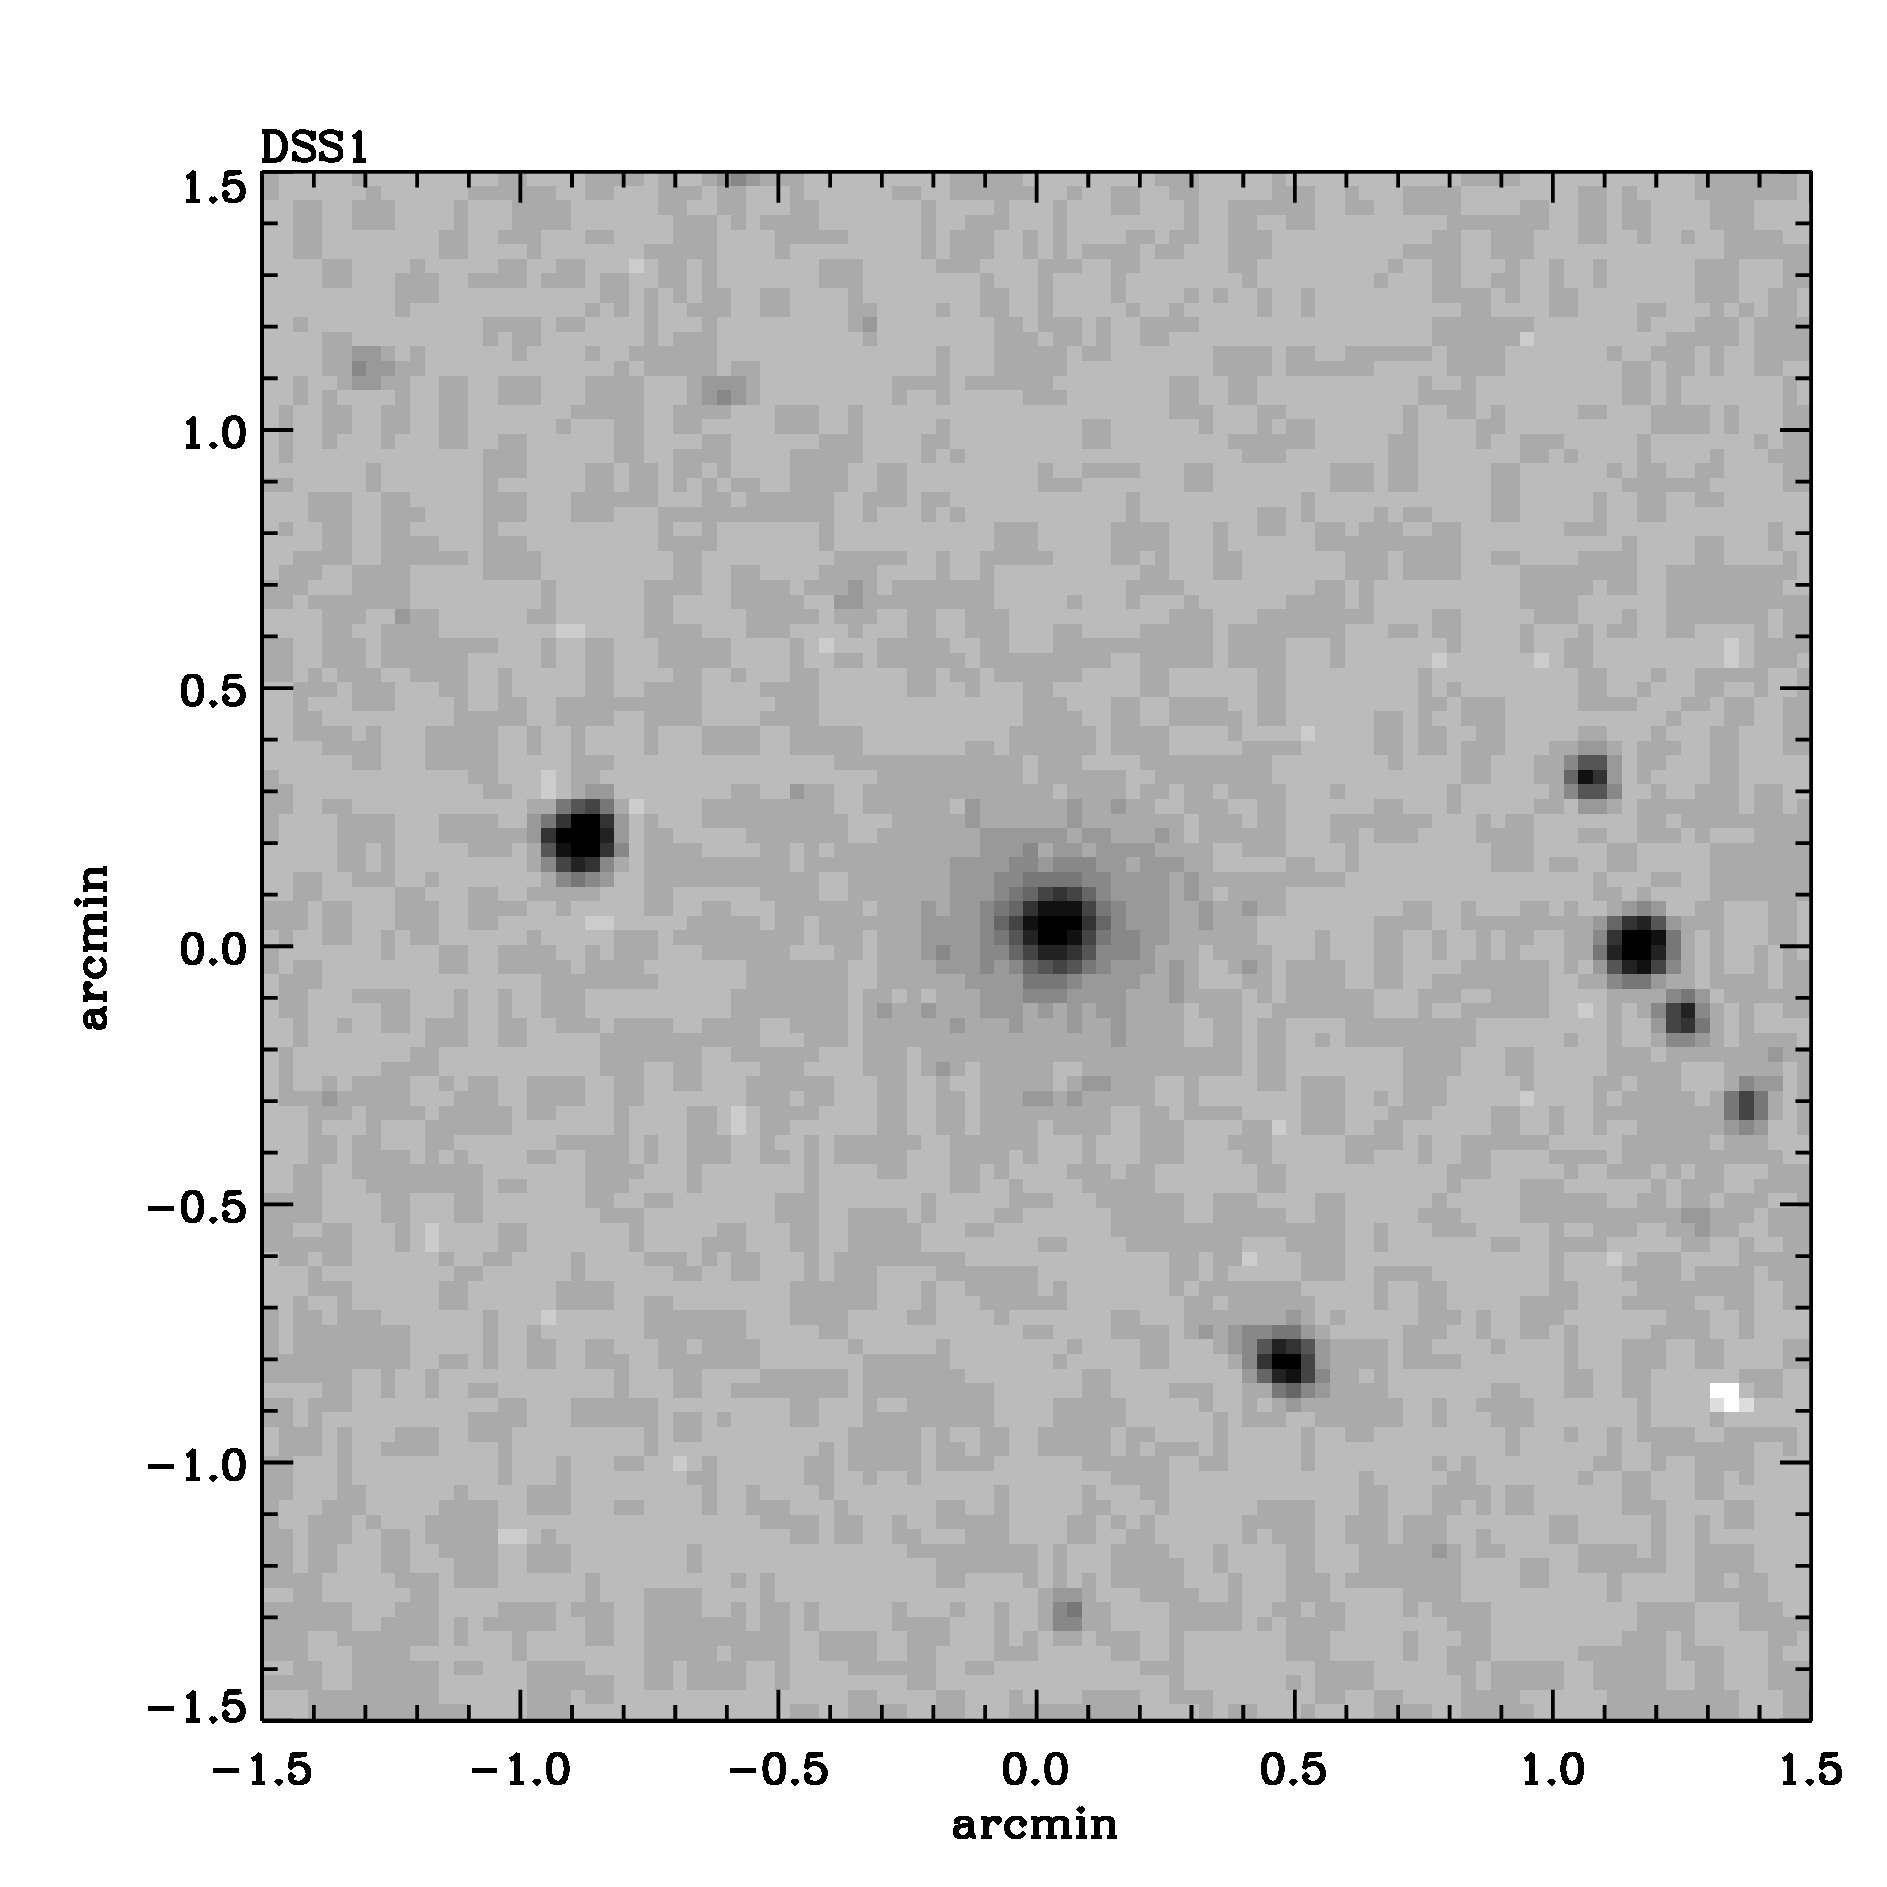 Optical image for SWIFT J1628.1+5145